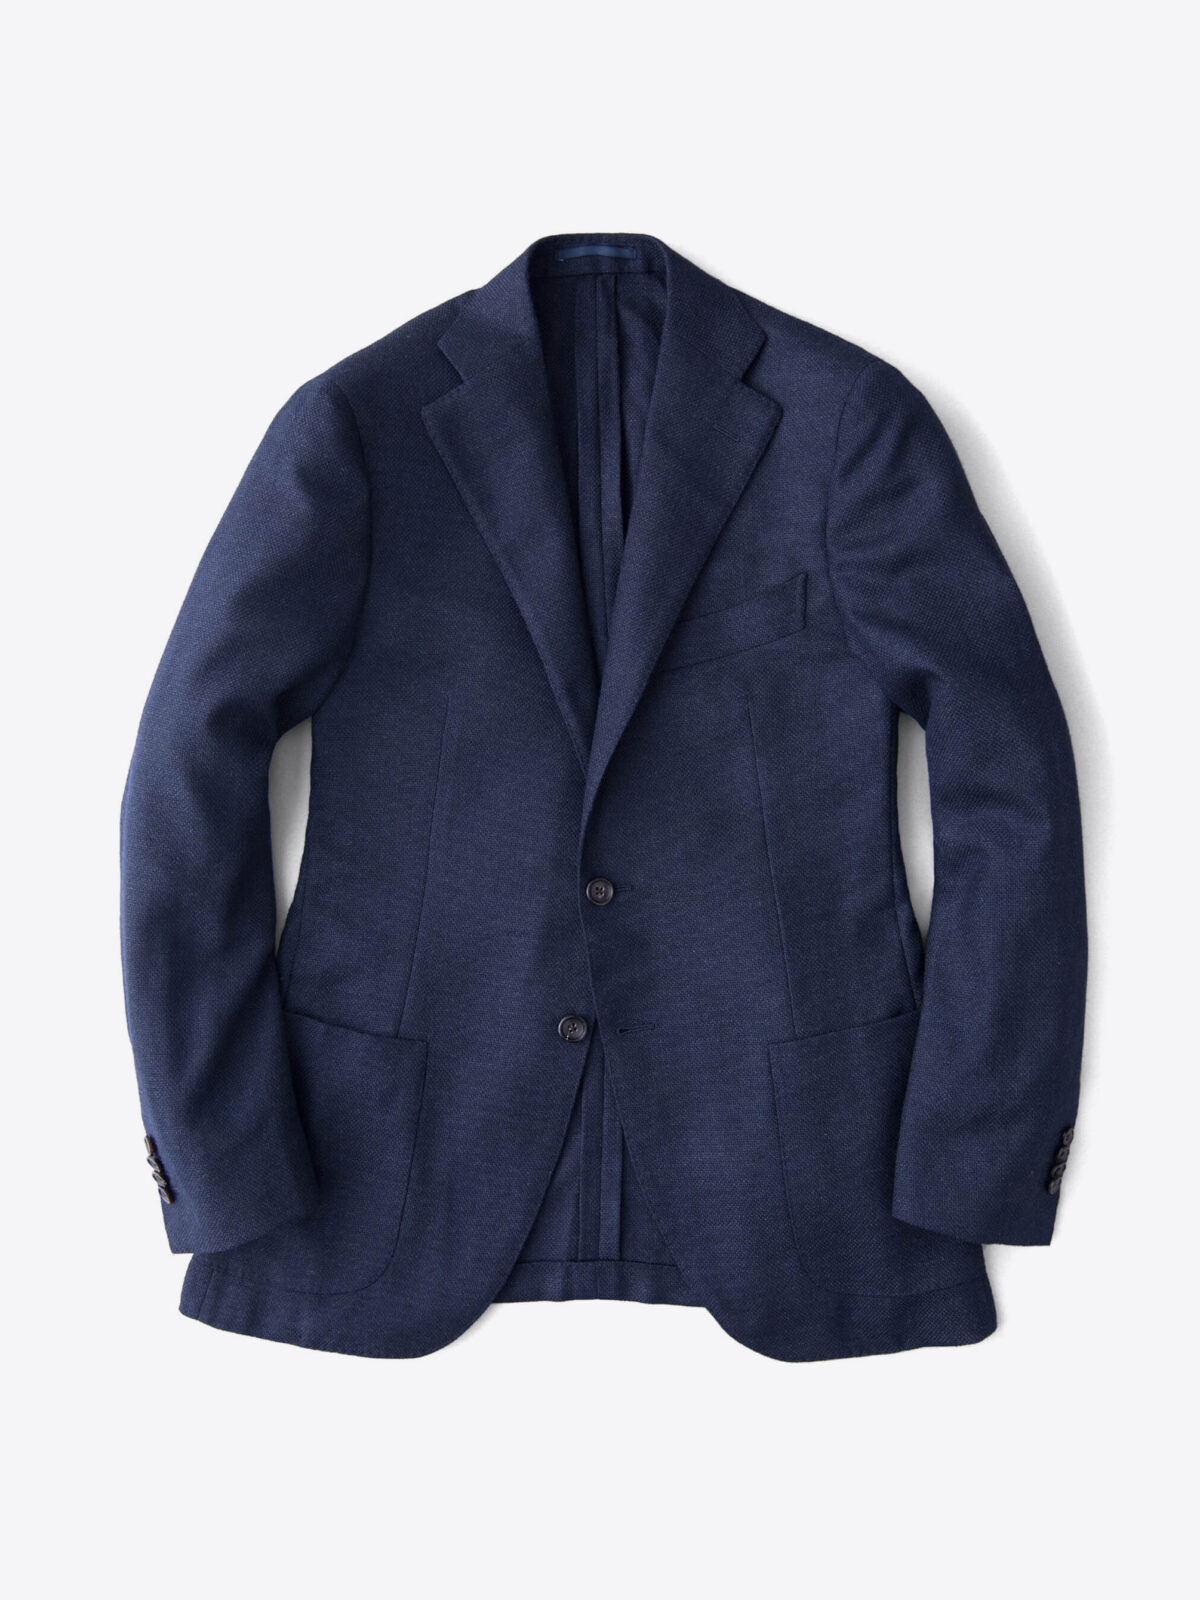 Hudson Navy Wool and Cashmere Flannel Hopsack Jacket